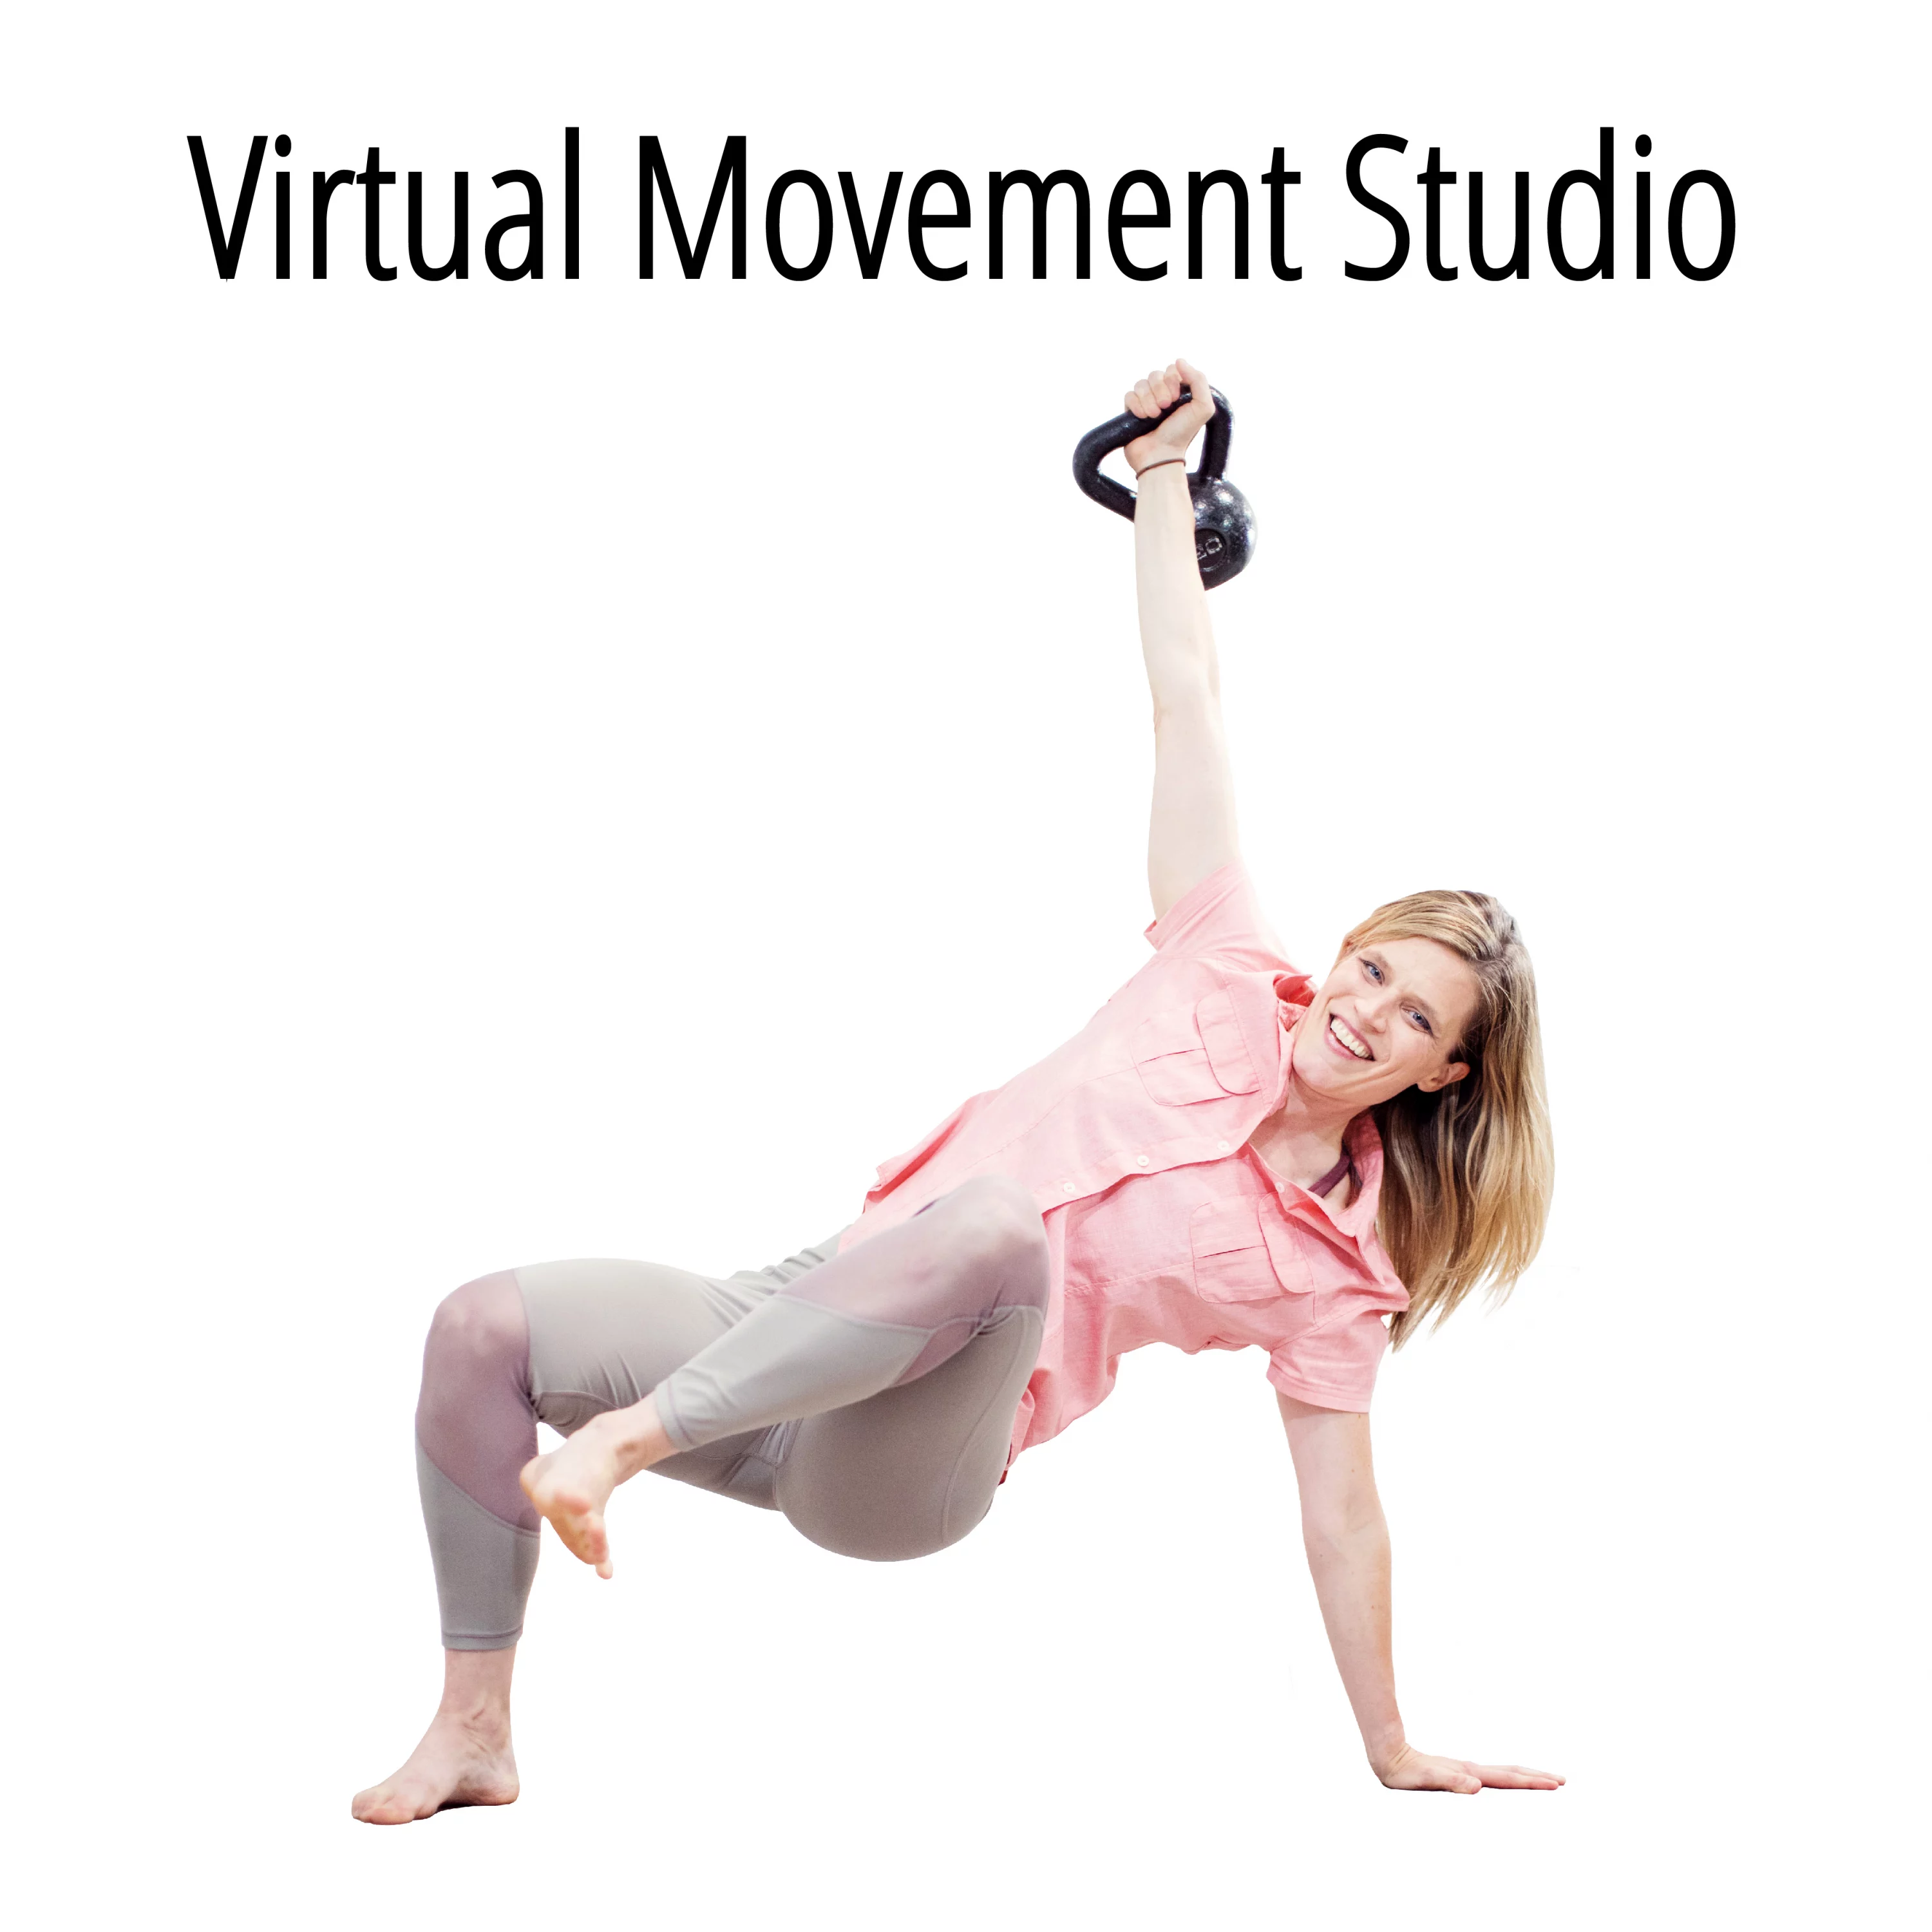 VIrtual Movement Studio